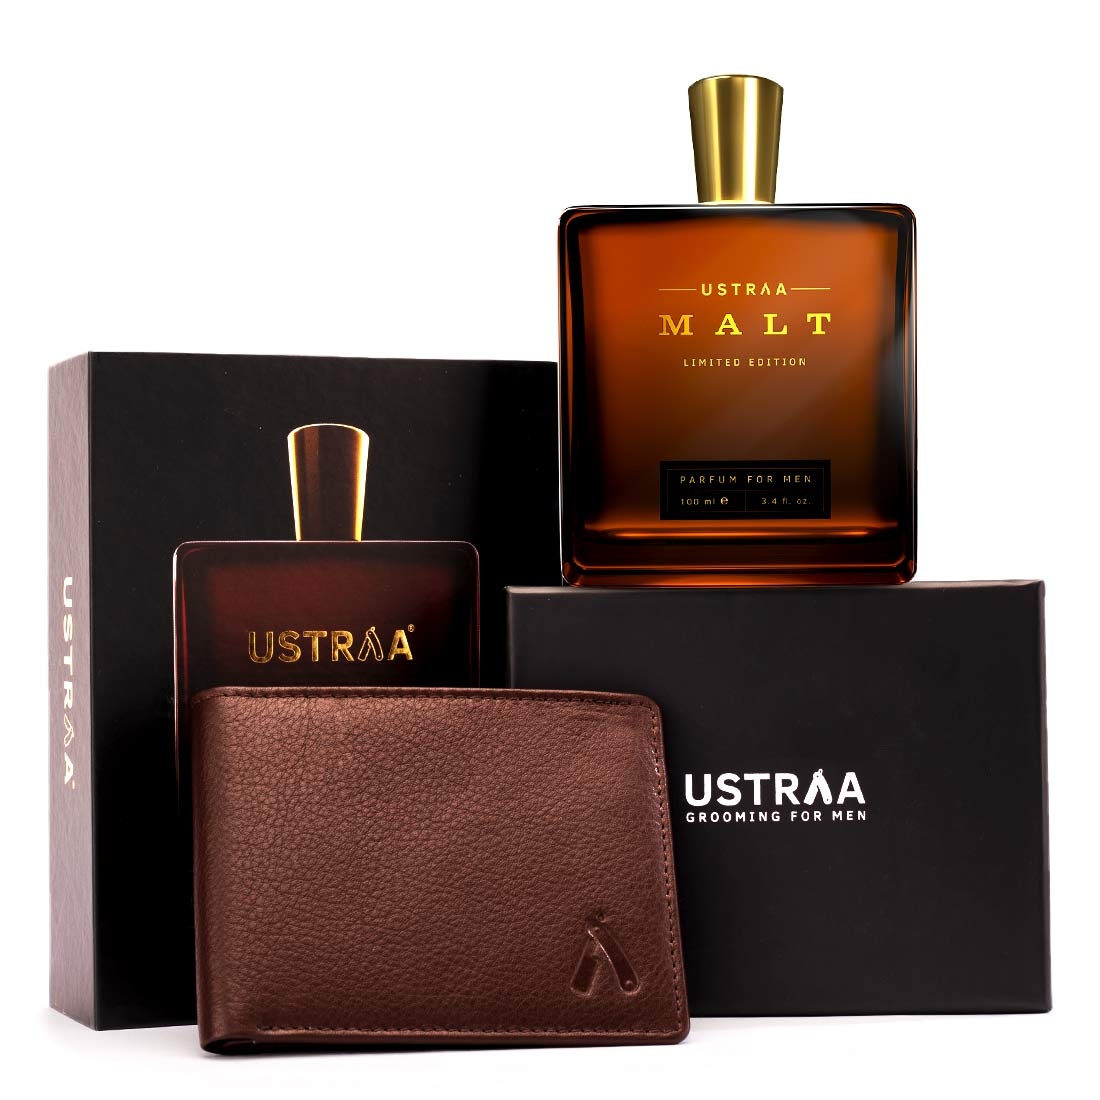 Ustraa | Ustraa Wallet & Malt - Perfume for Men 100ml